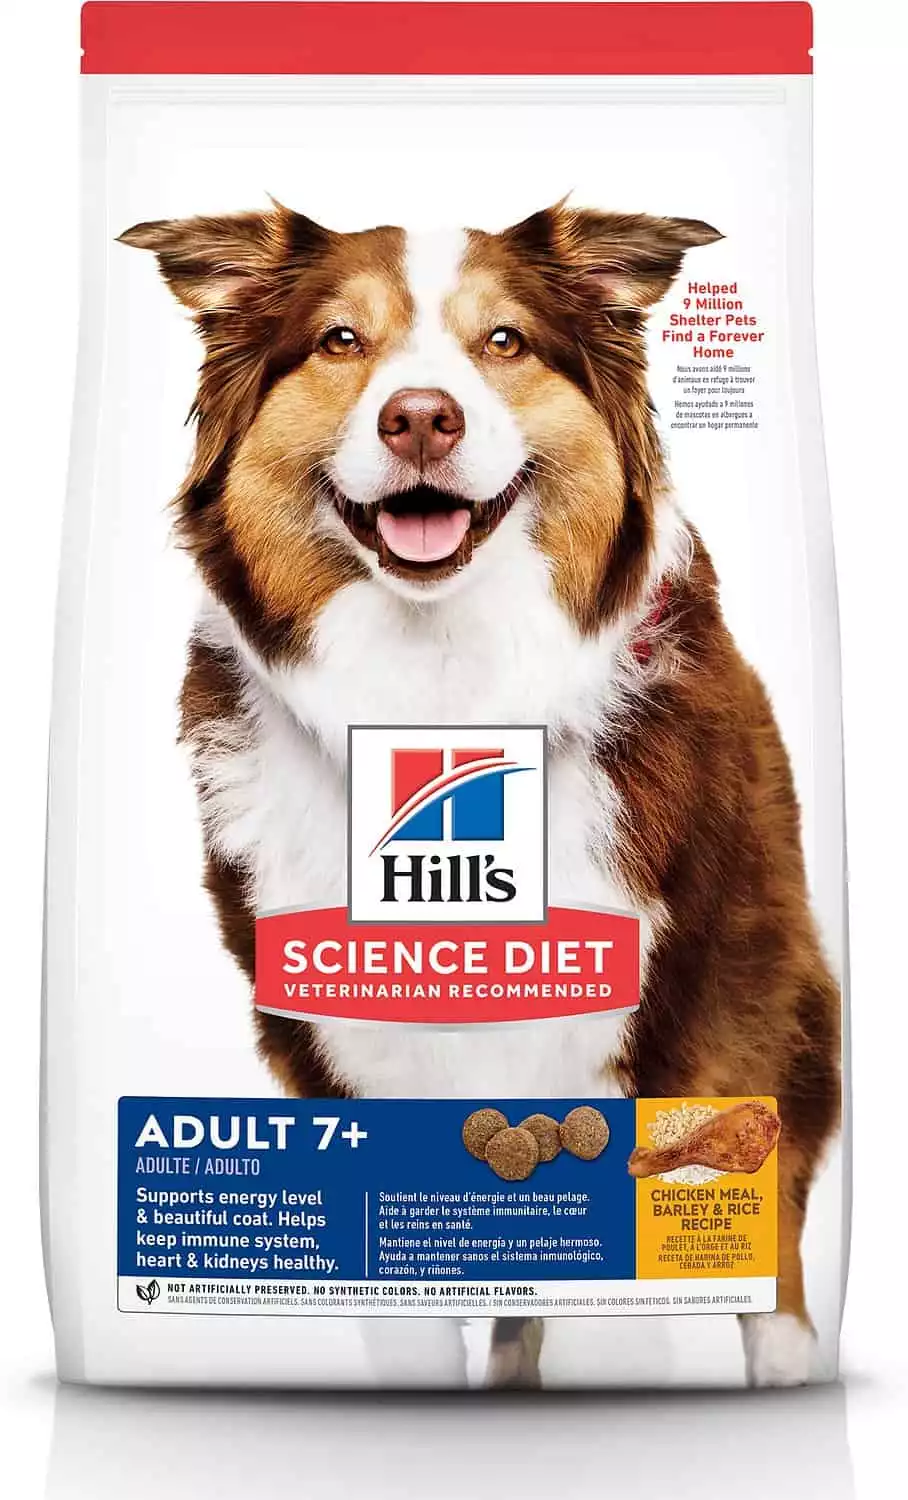 HILL'S Science Diet